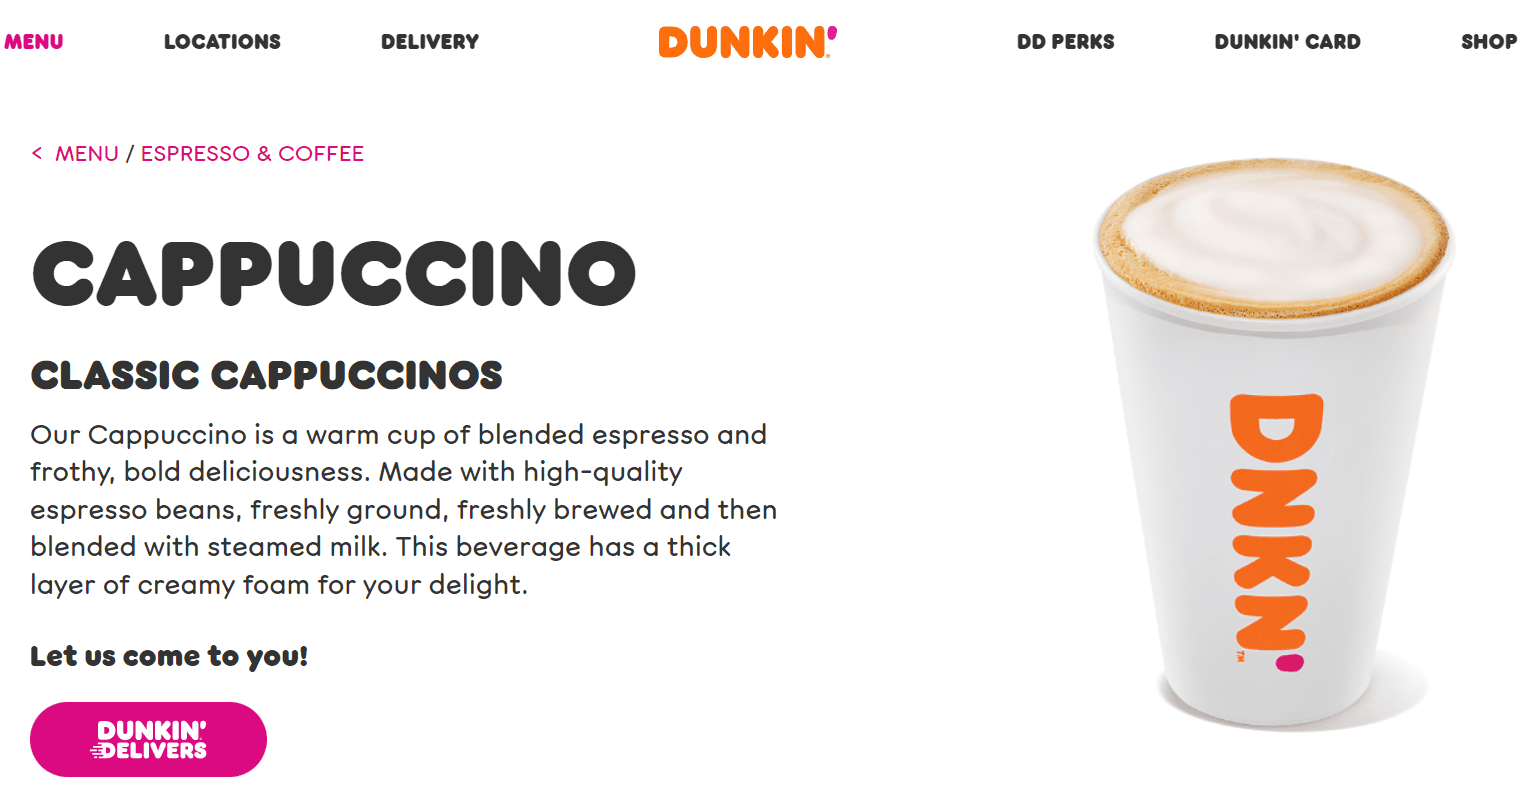 Dunkin’ Donuts Cappuccino